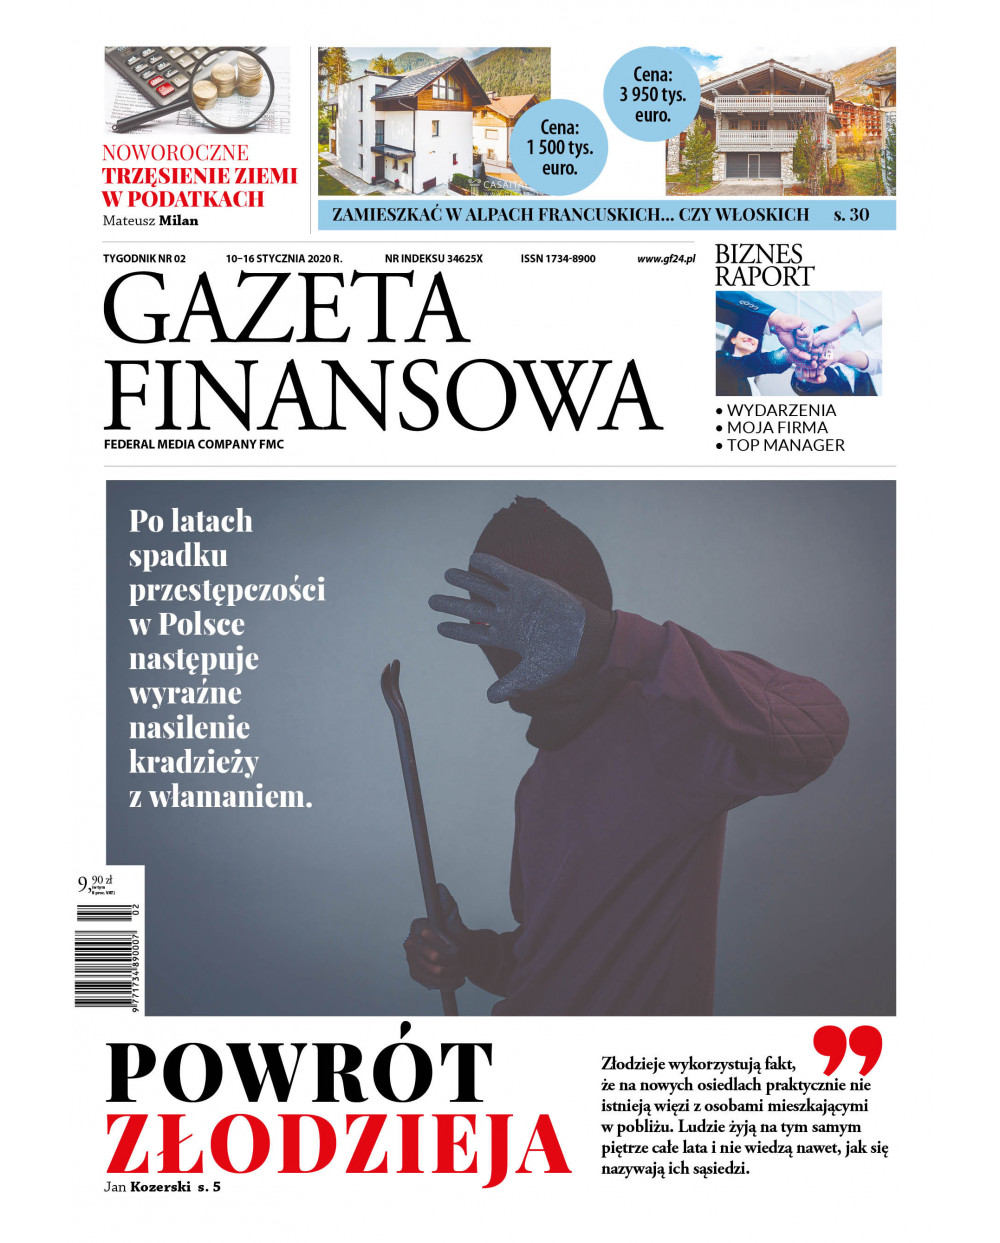 Gazeta Finansowa 02/2020